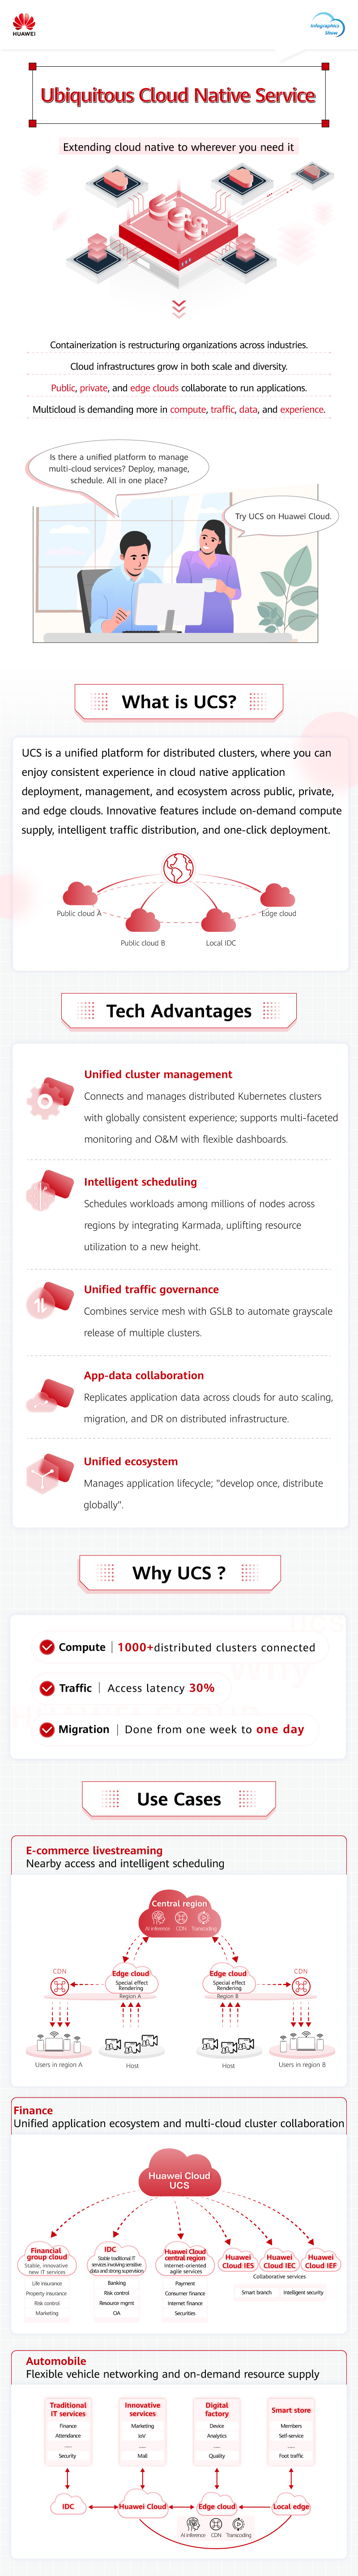 Infographic for Huawei Cloud UCS_Ubiquitous Cloud Native Service ...